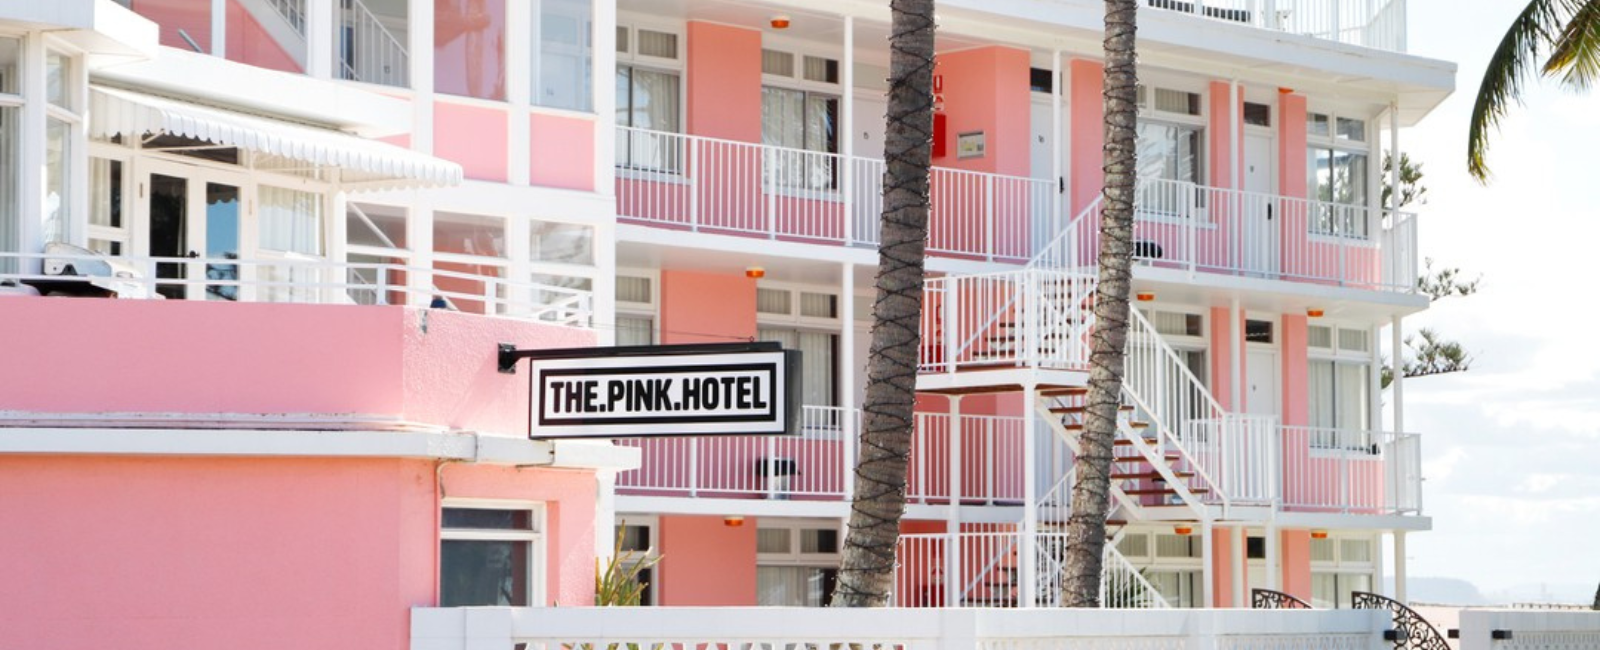 The Pink Hotel, Coolangatta